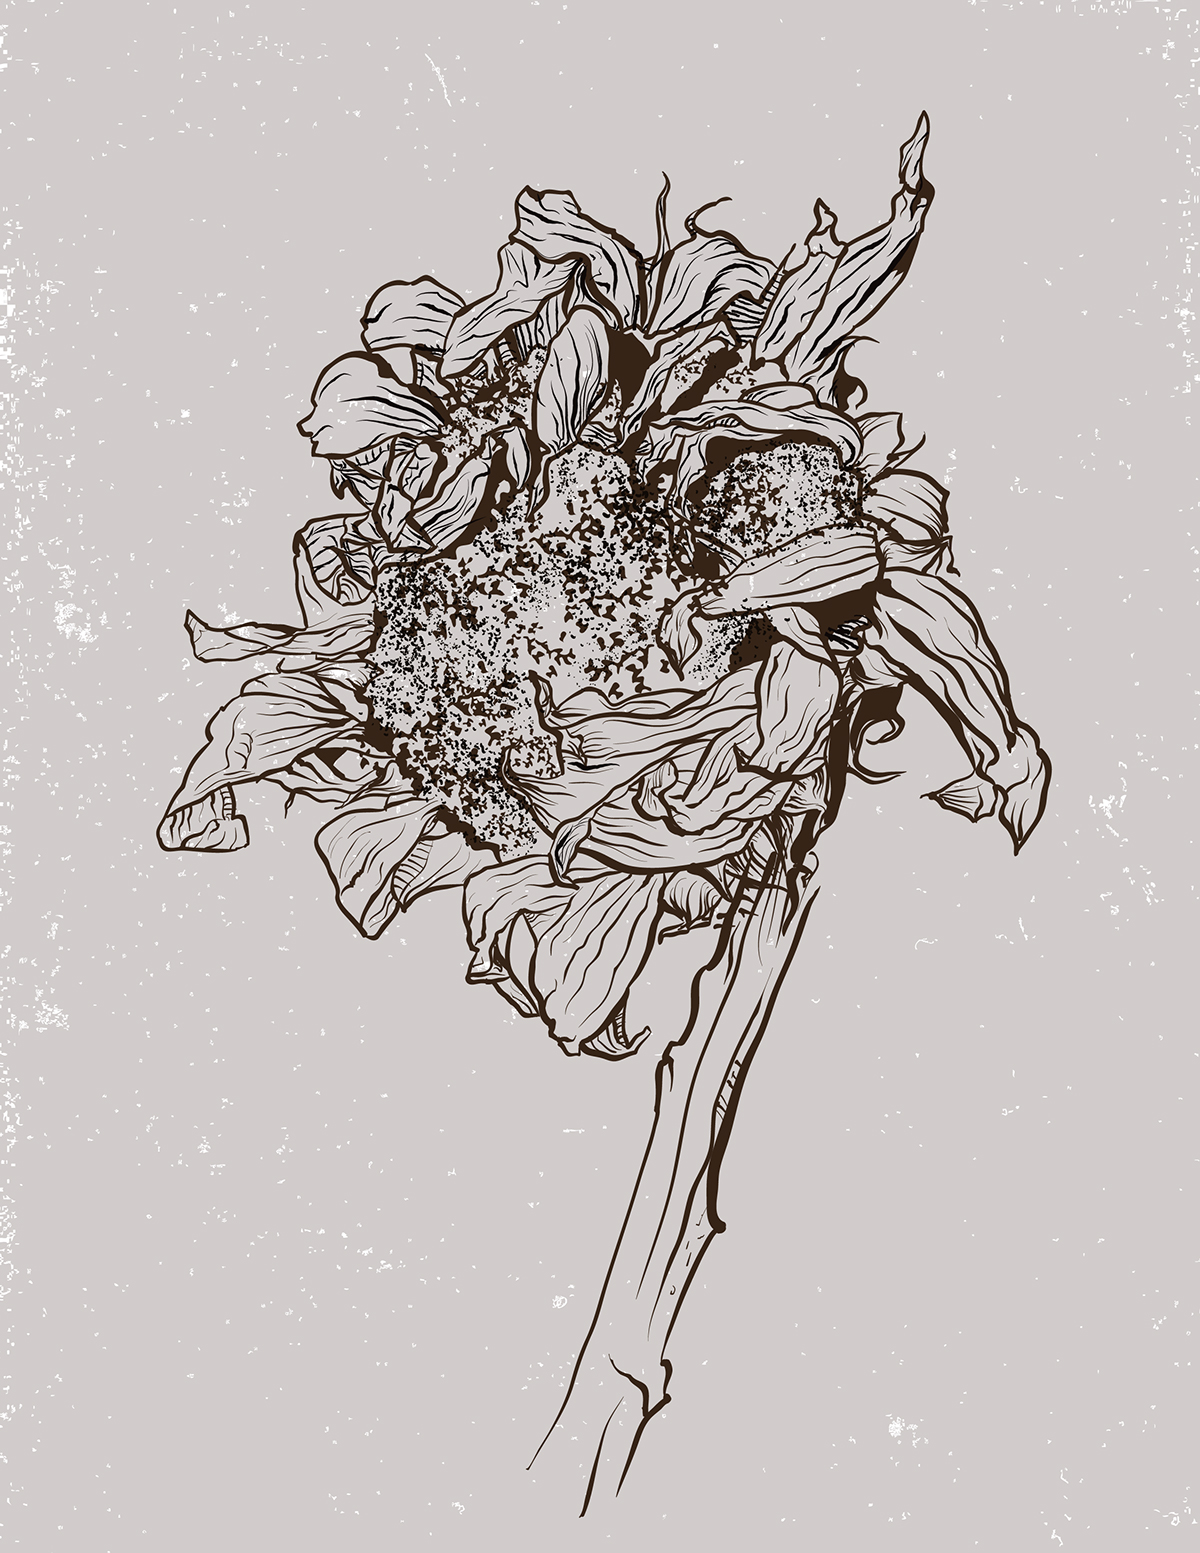 #illustration #decay #Vector #sunflower